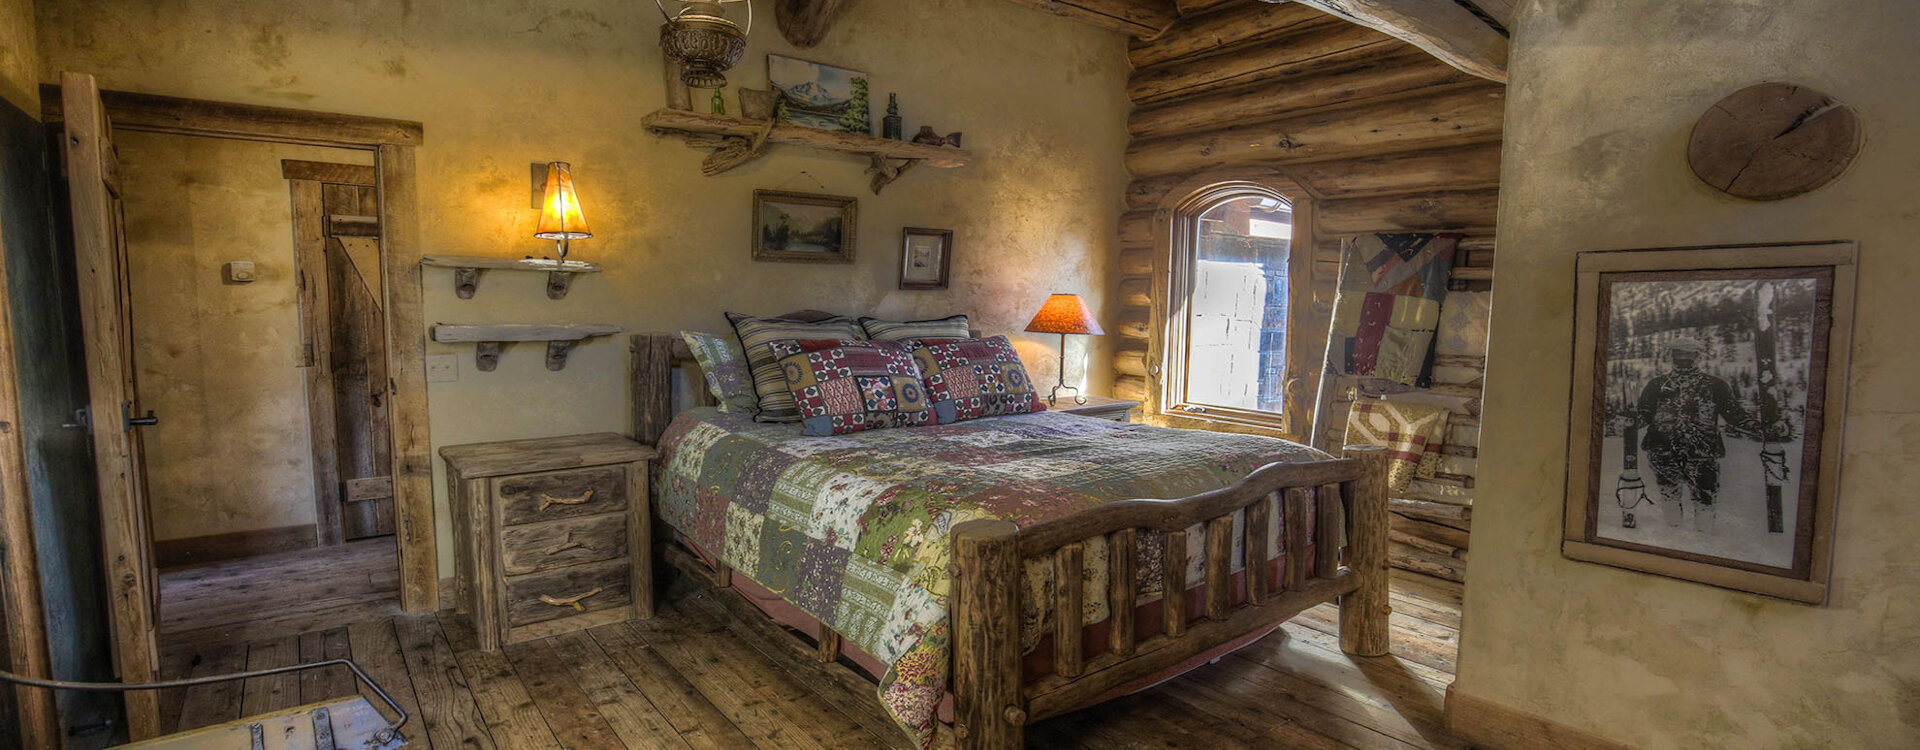 31-telluride-castlewood-guest-bedroom-5-reverse